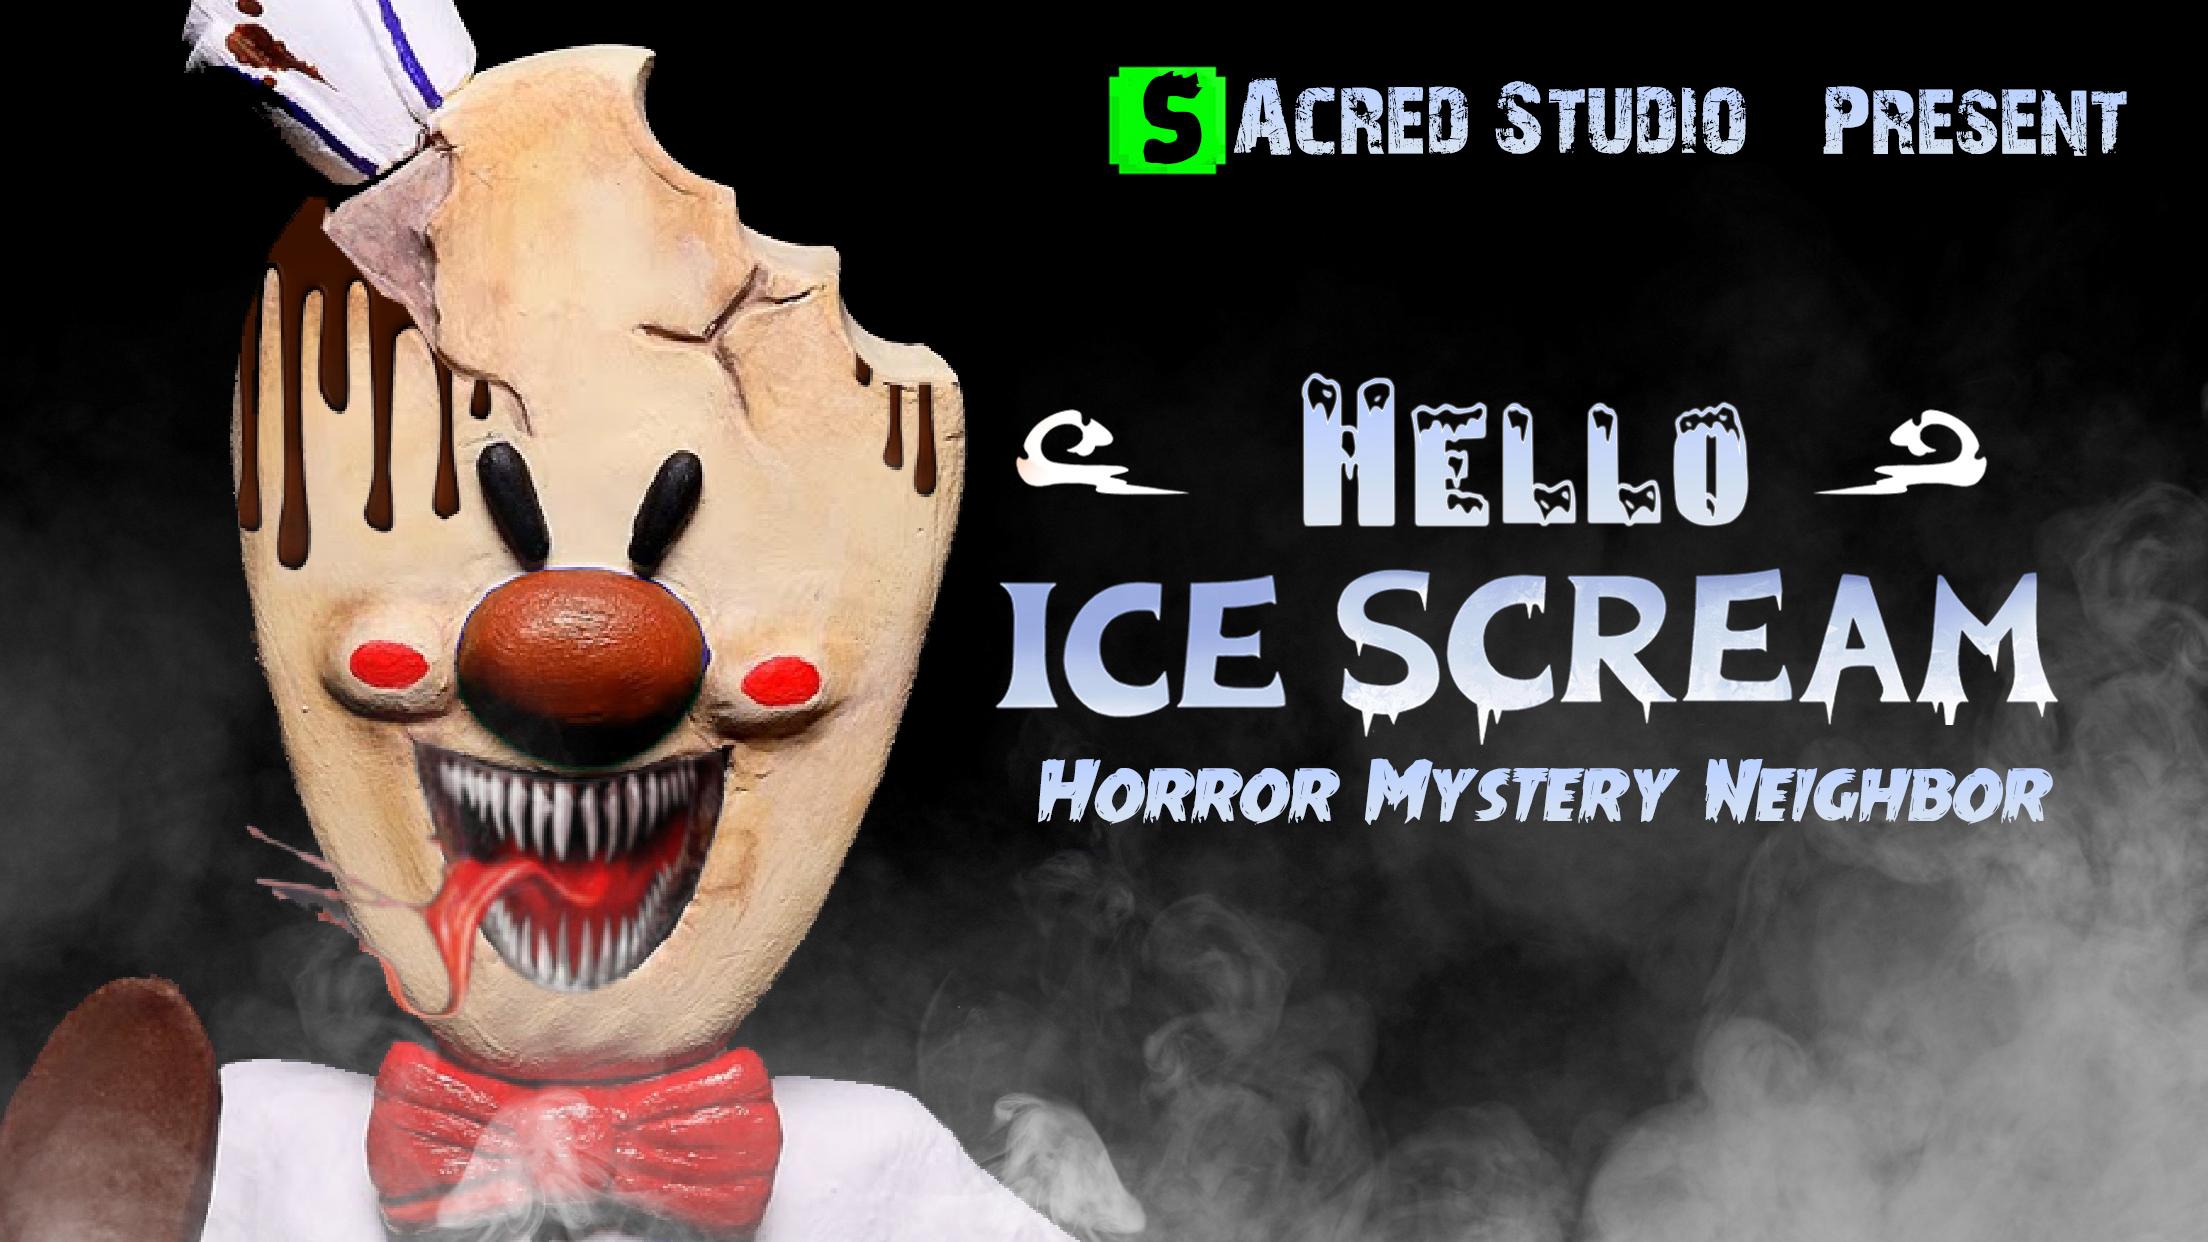 Scary ice. Scary Ice Scream. Ice Cream Scary Neighbor Horror. Cafe Scary Ice Scream.